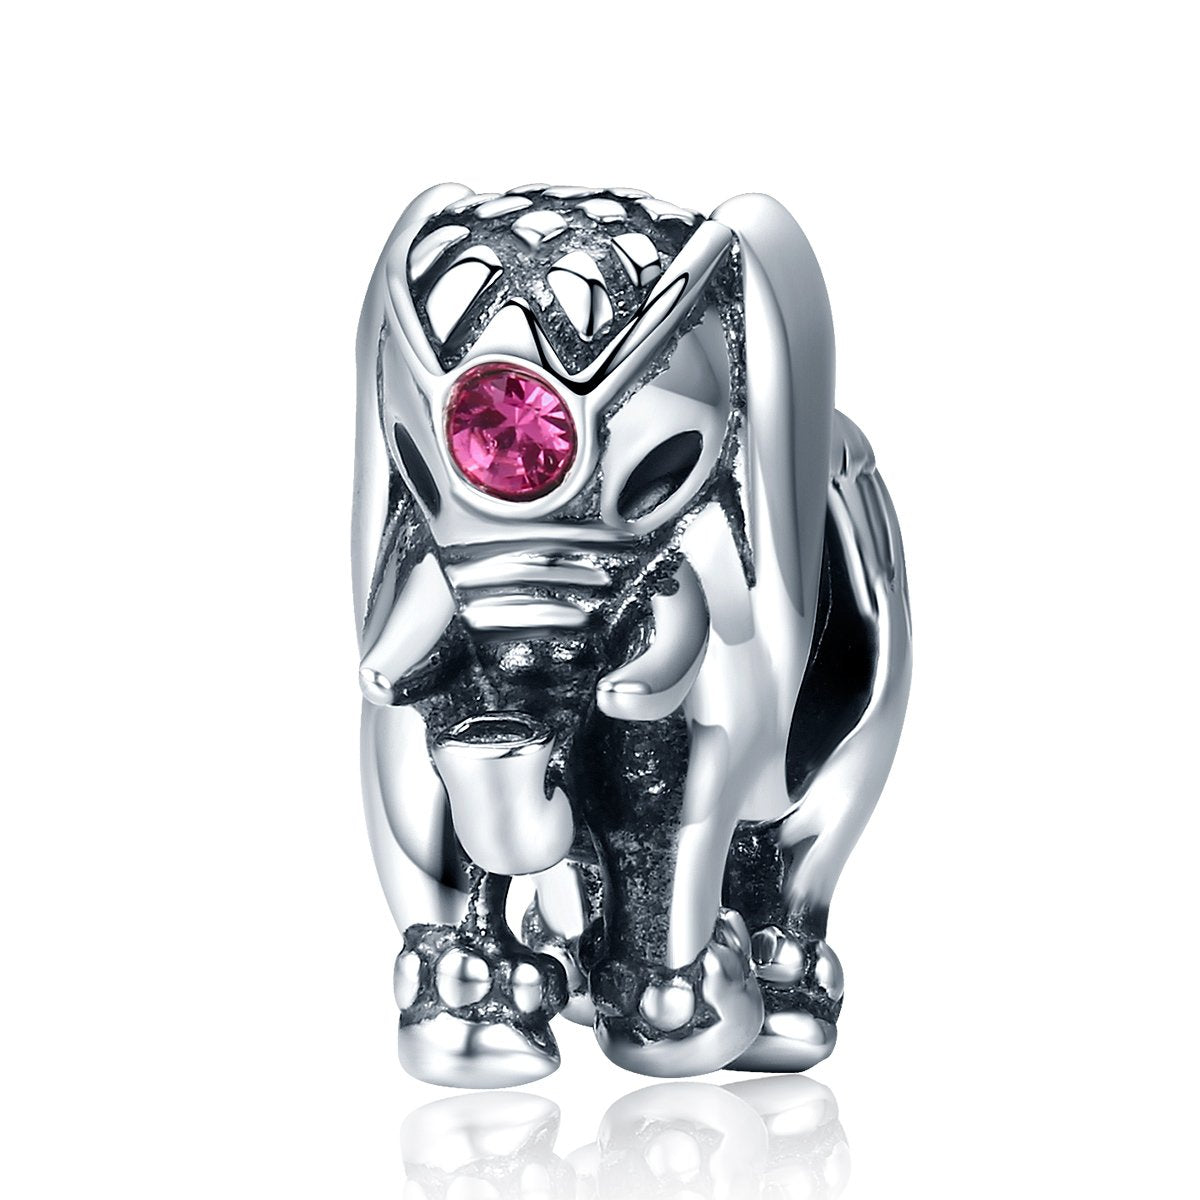 Sterling 925 silver charm the India elephant bead pendant fits Pandora charm and European charm bracelet Xaxe.com